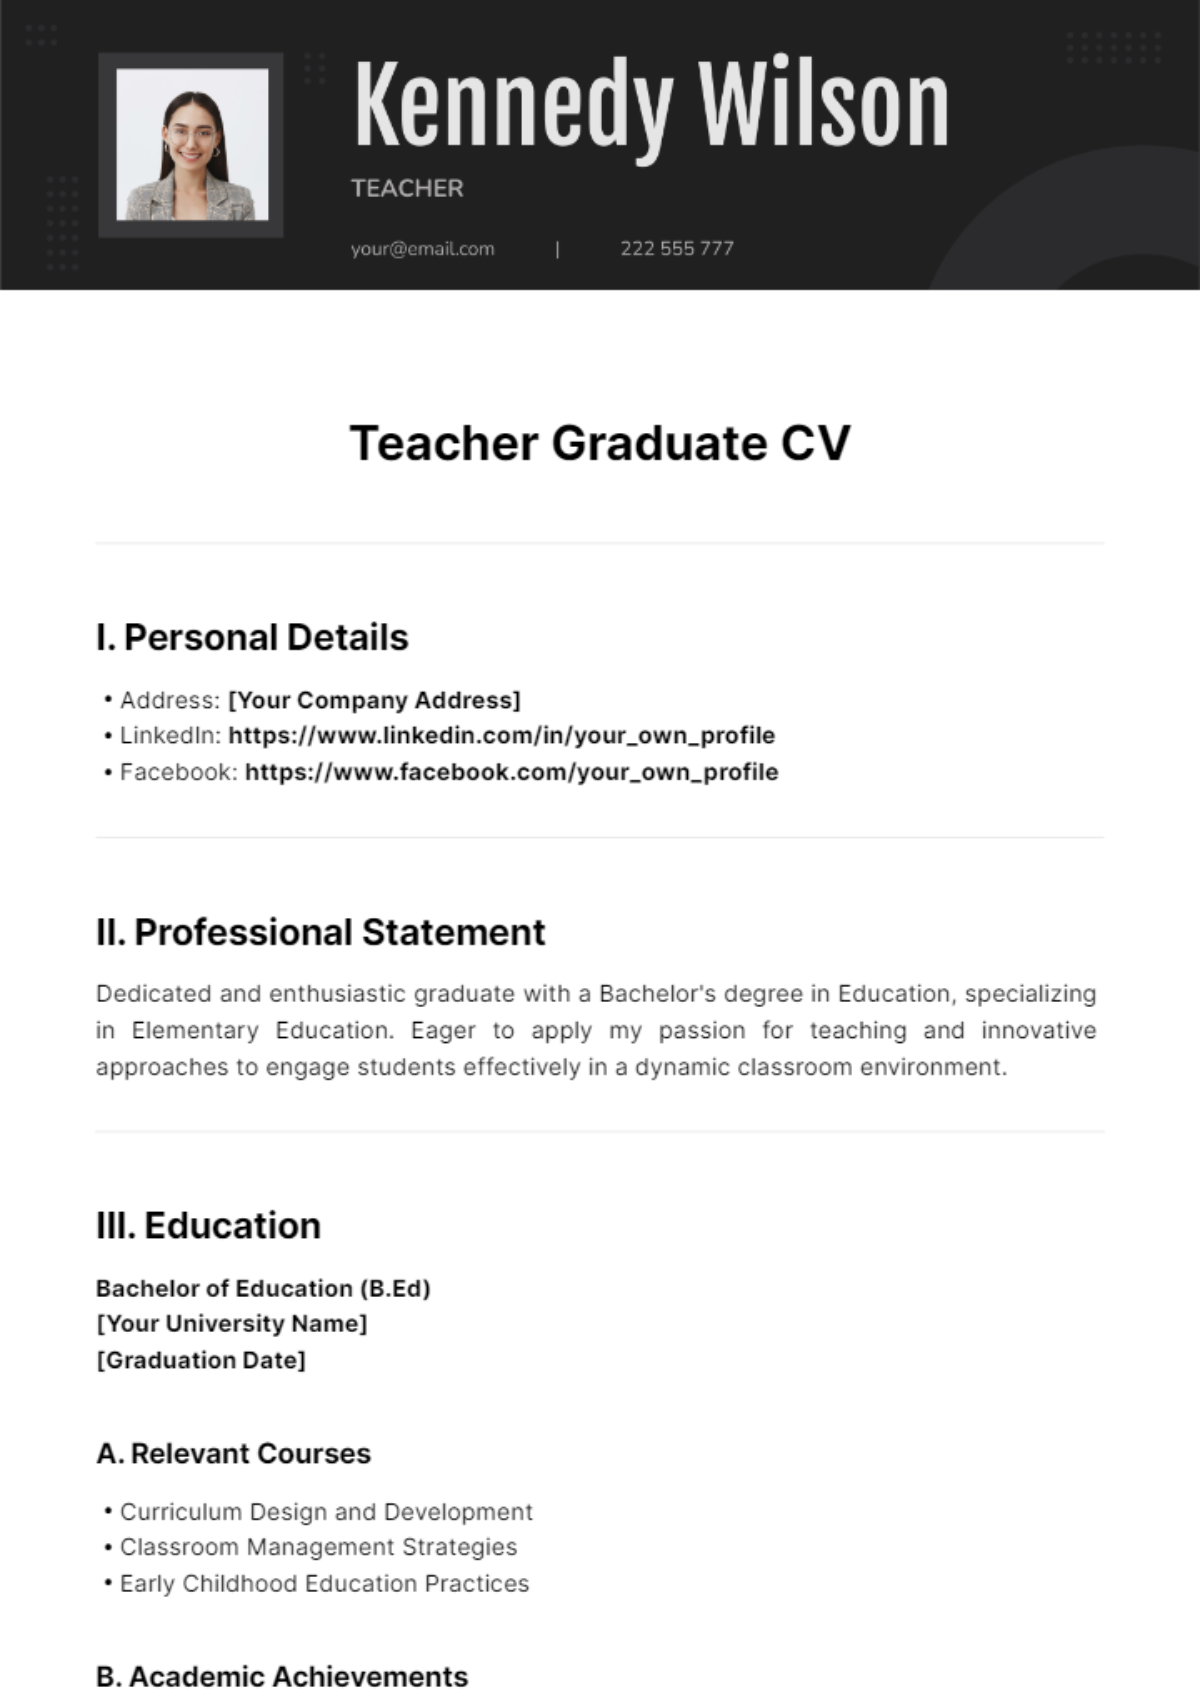 Teacher Graduate CV Template